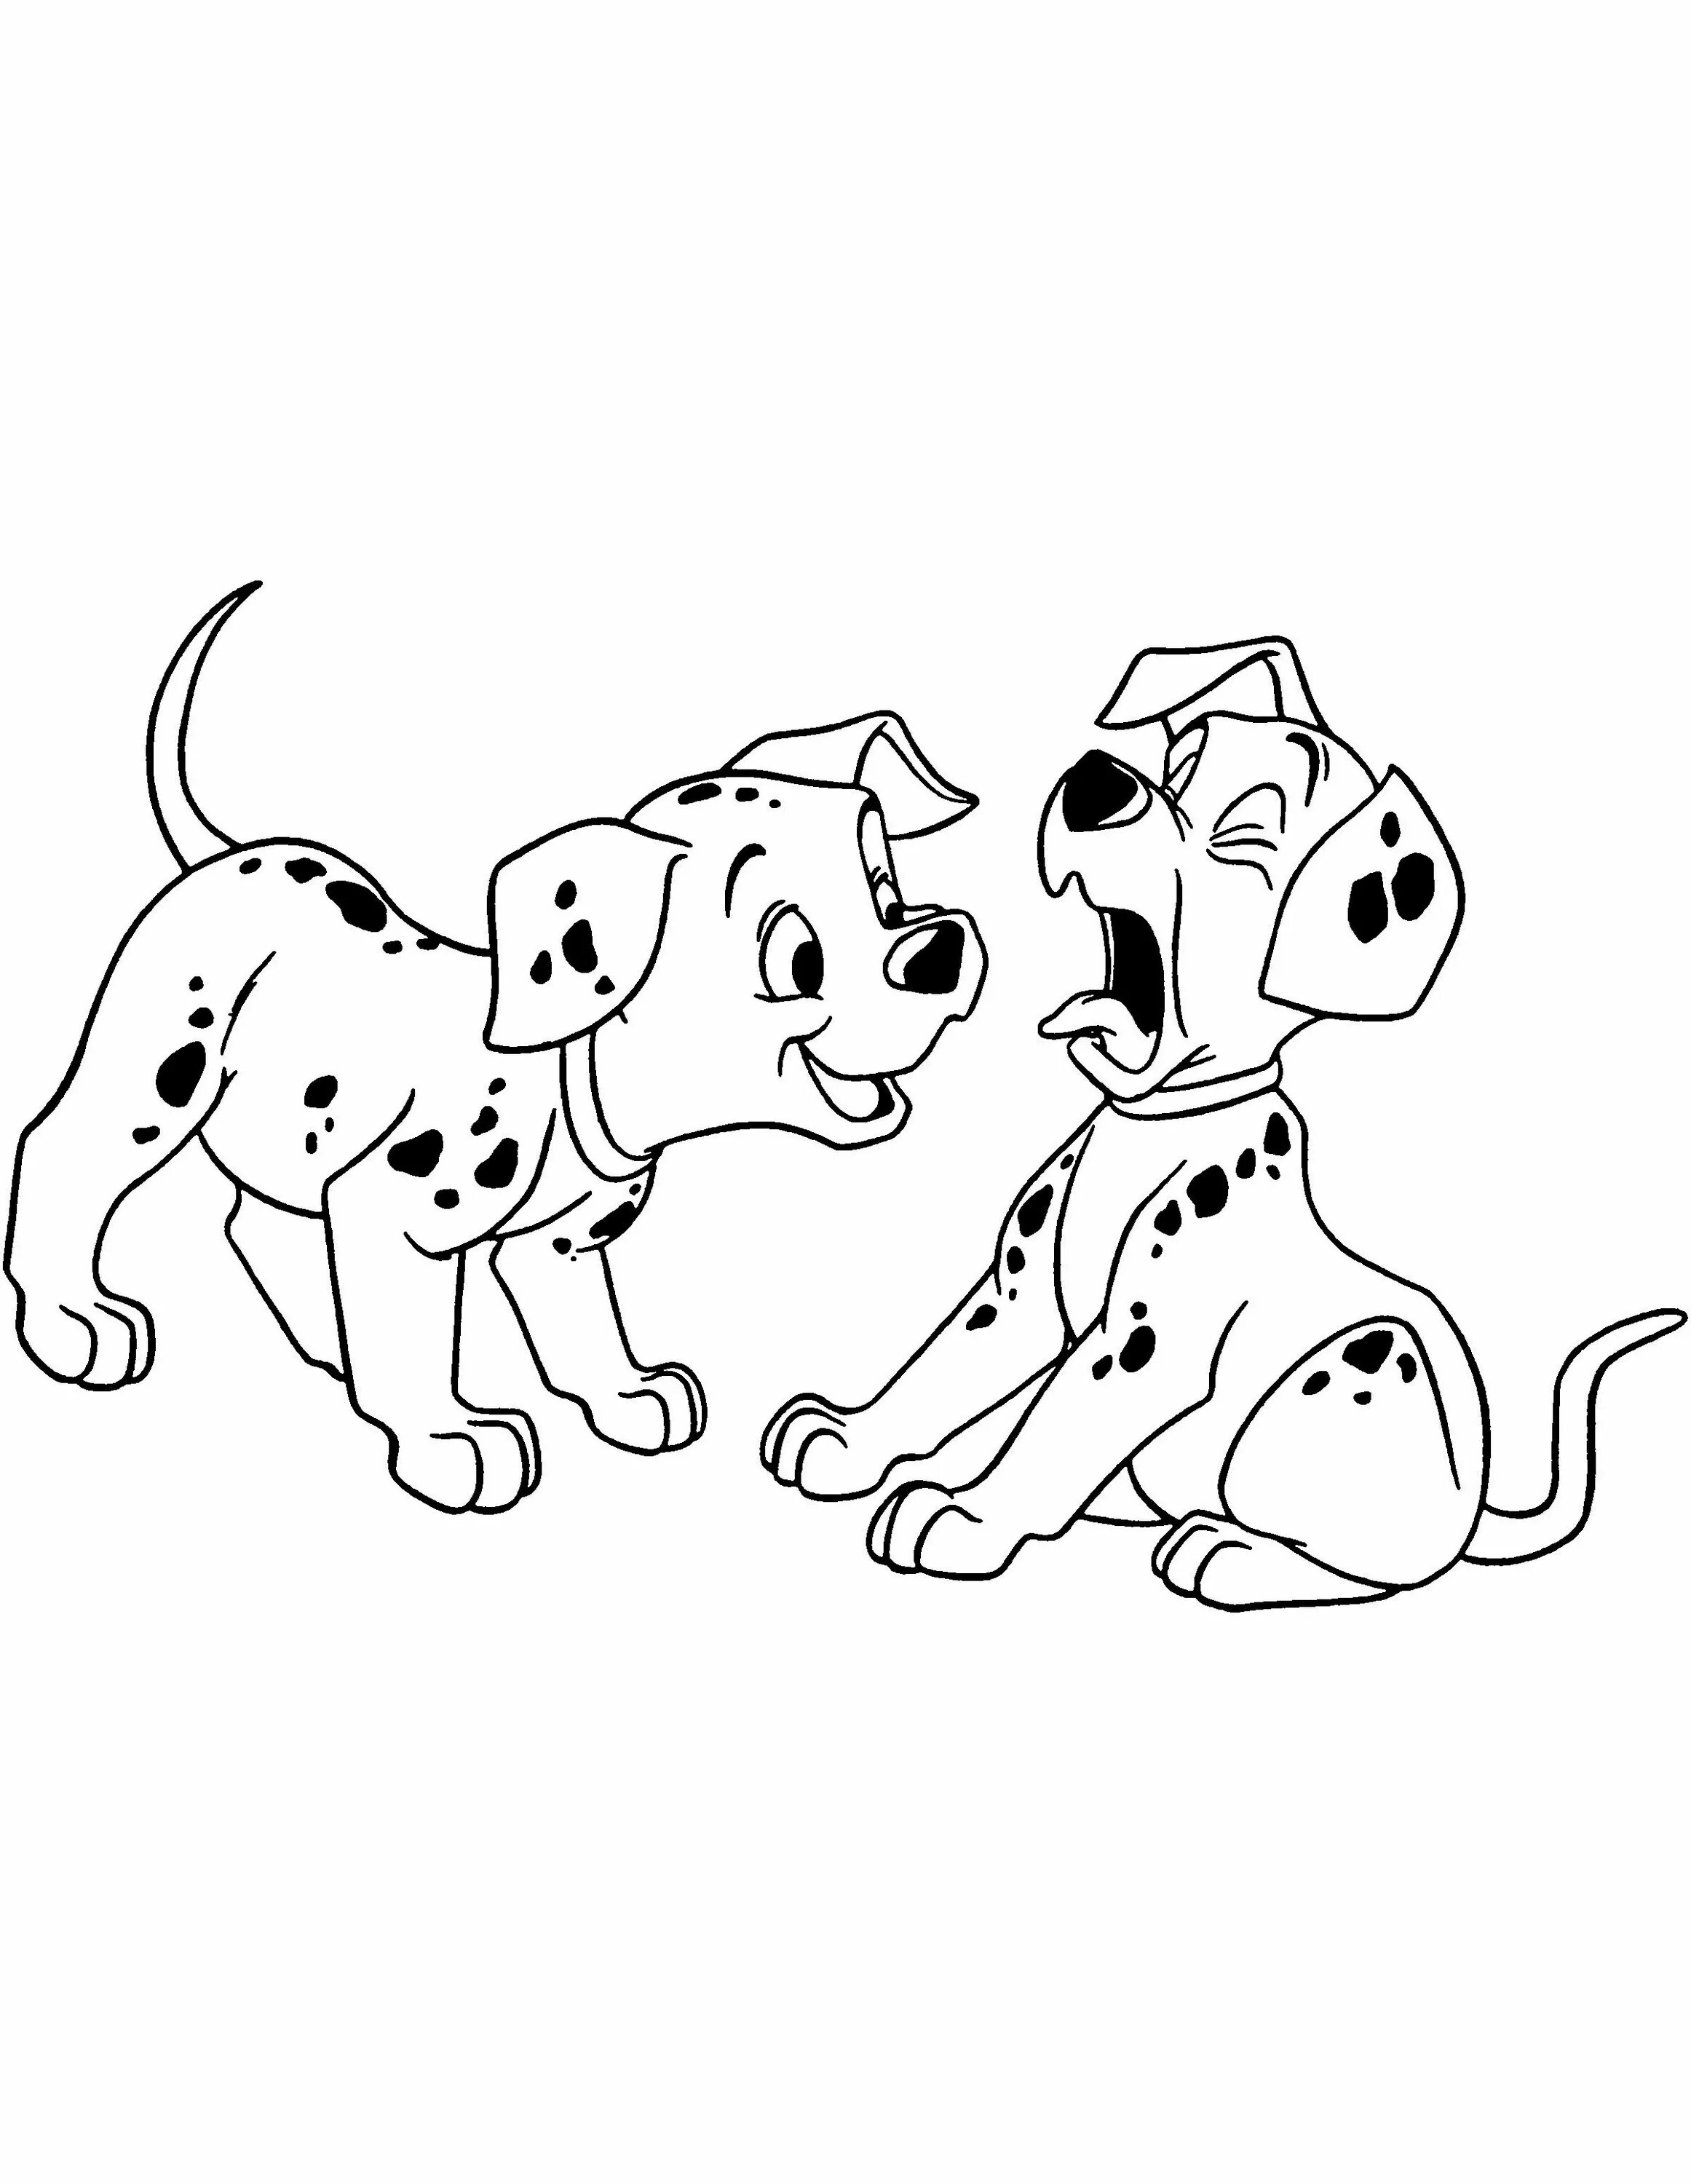 Раскраска радостная собачья семья